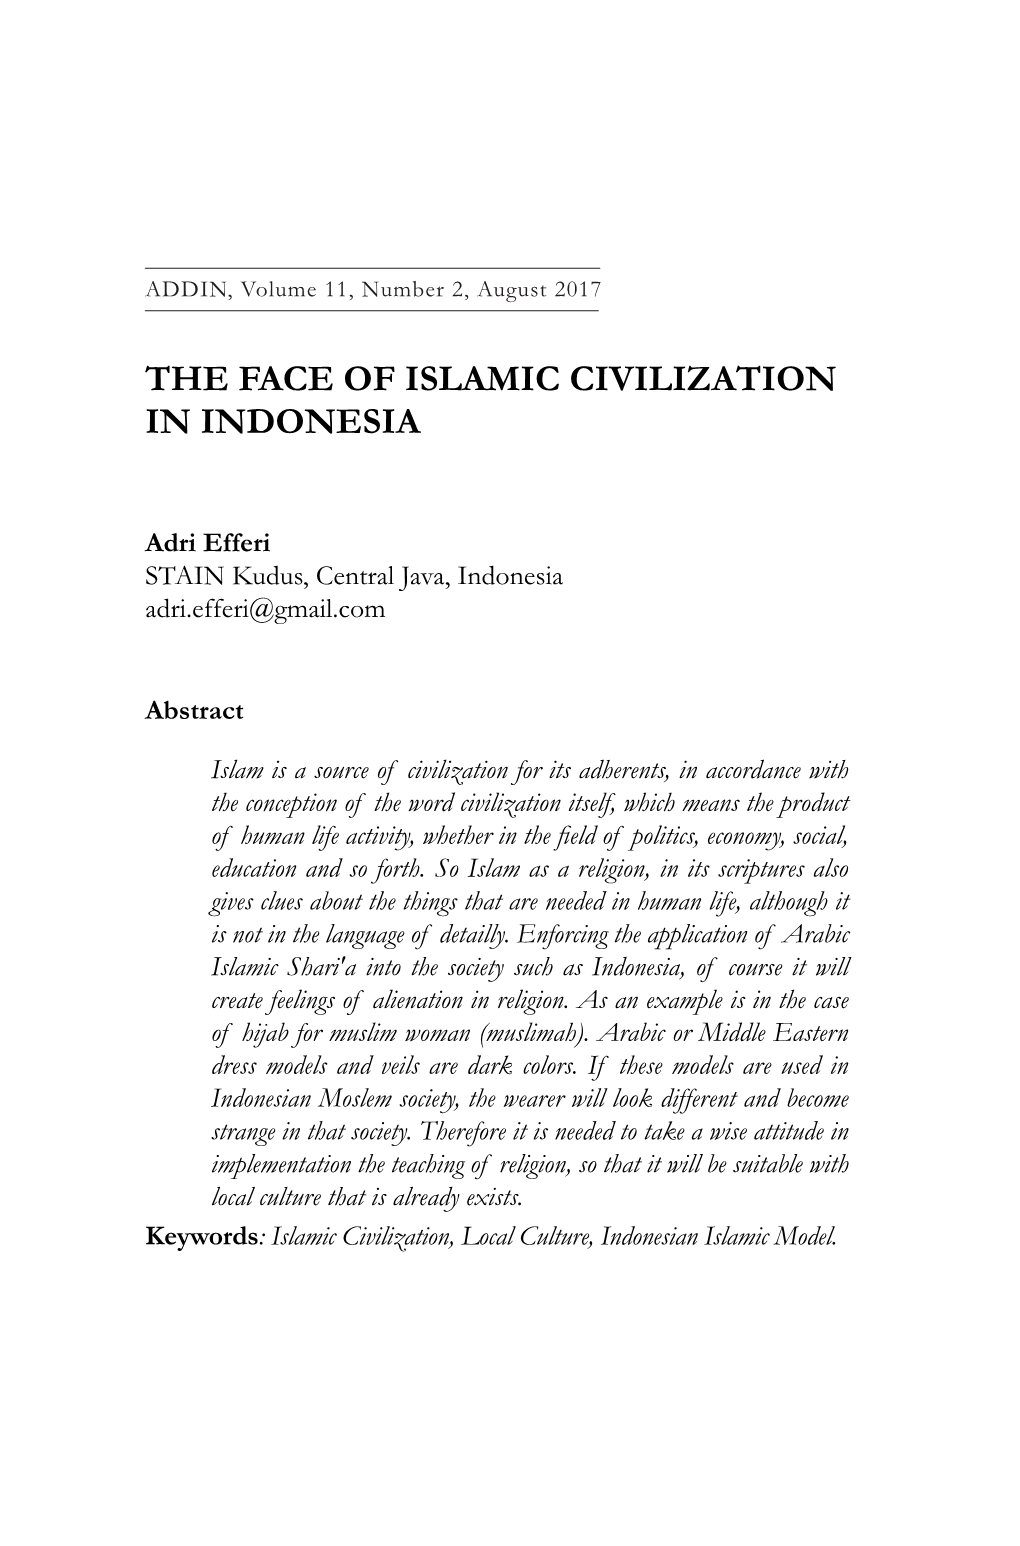 The Face of Islamic Civilization in Indonesia